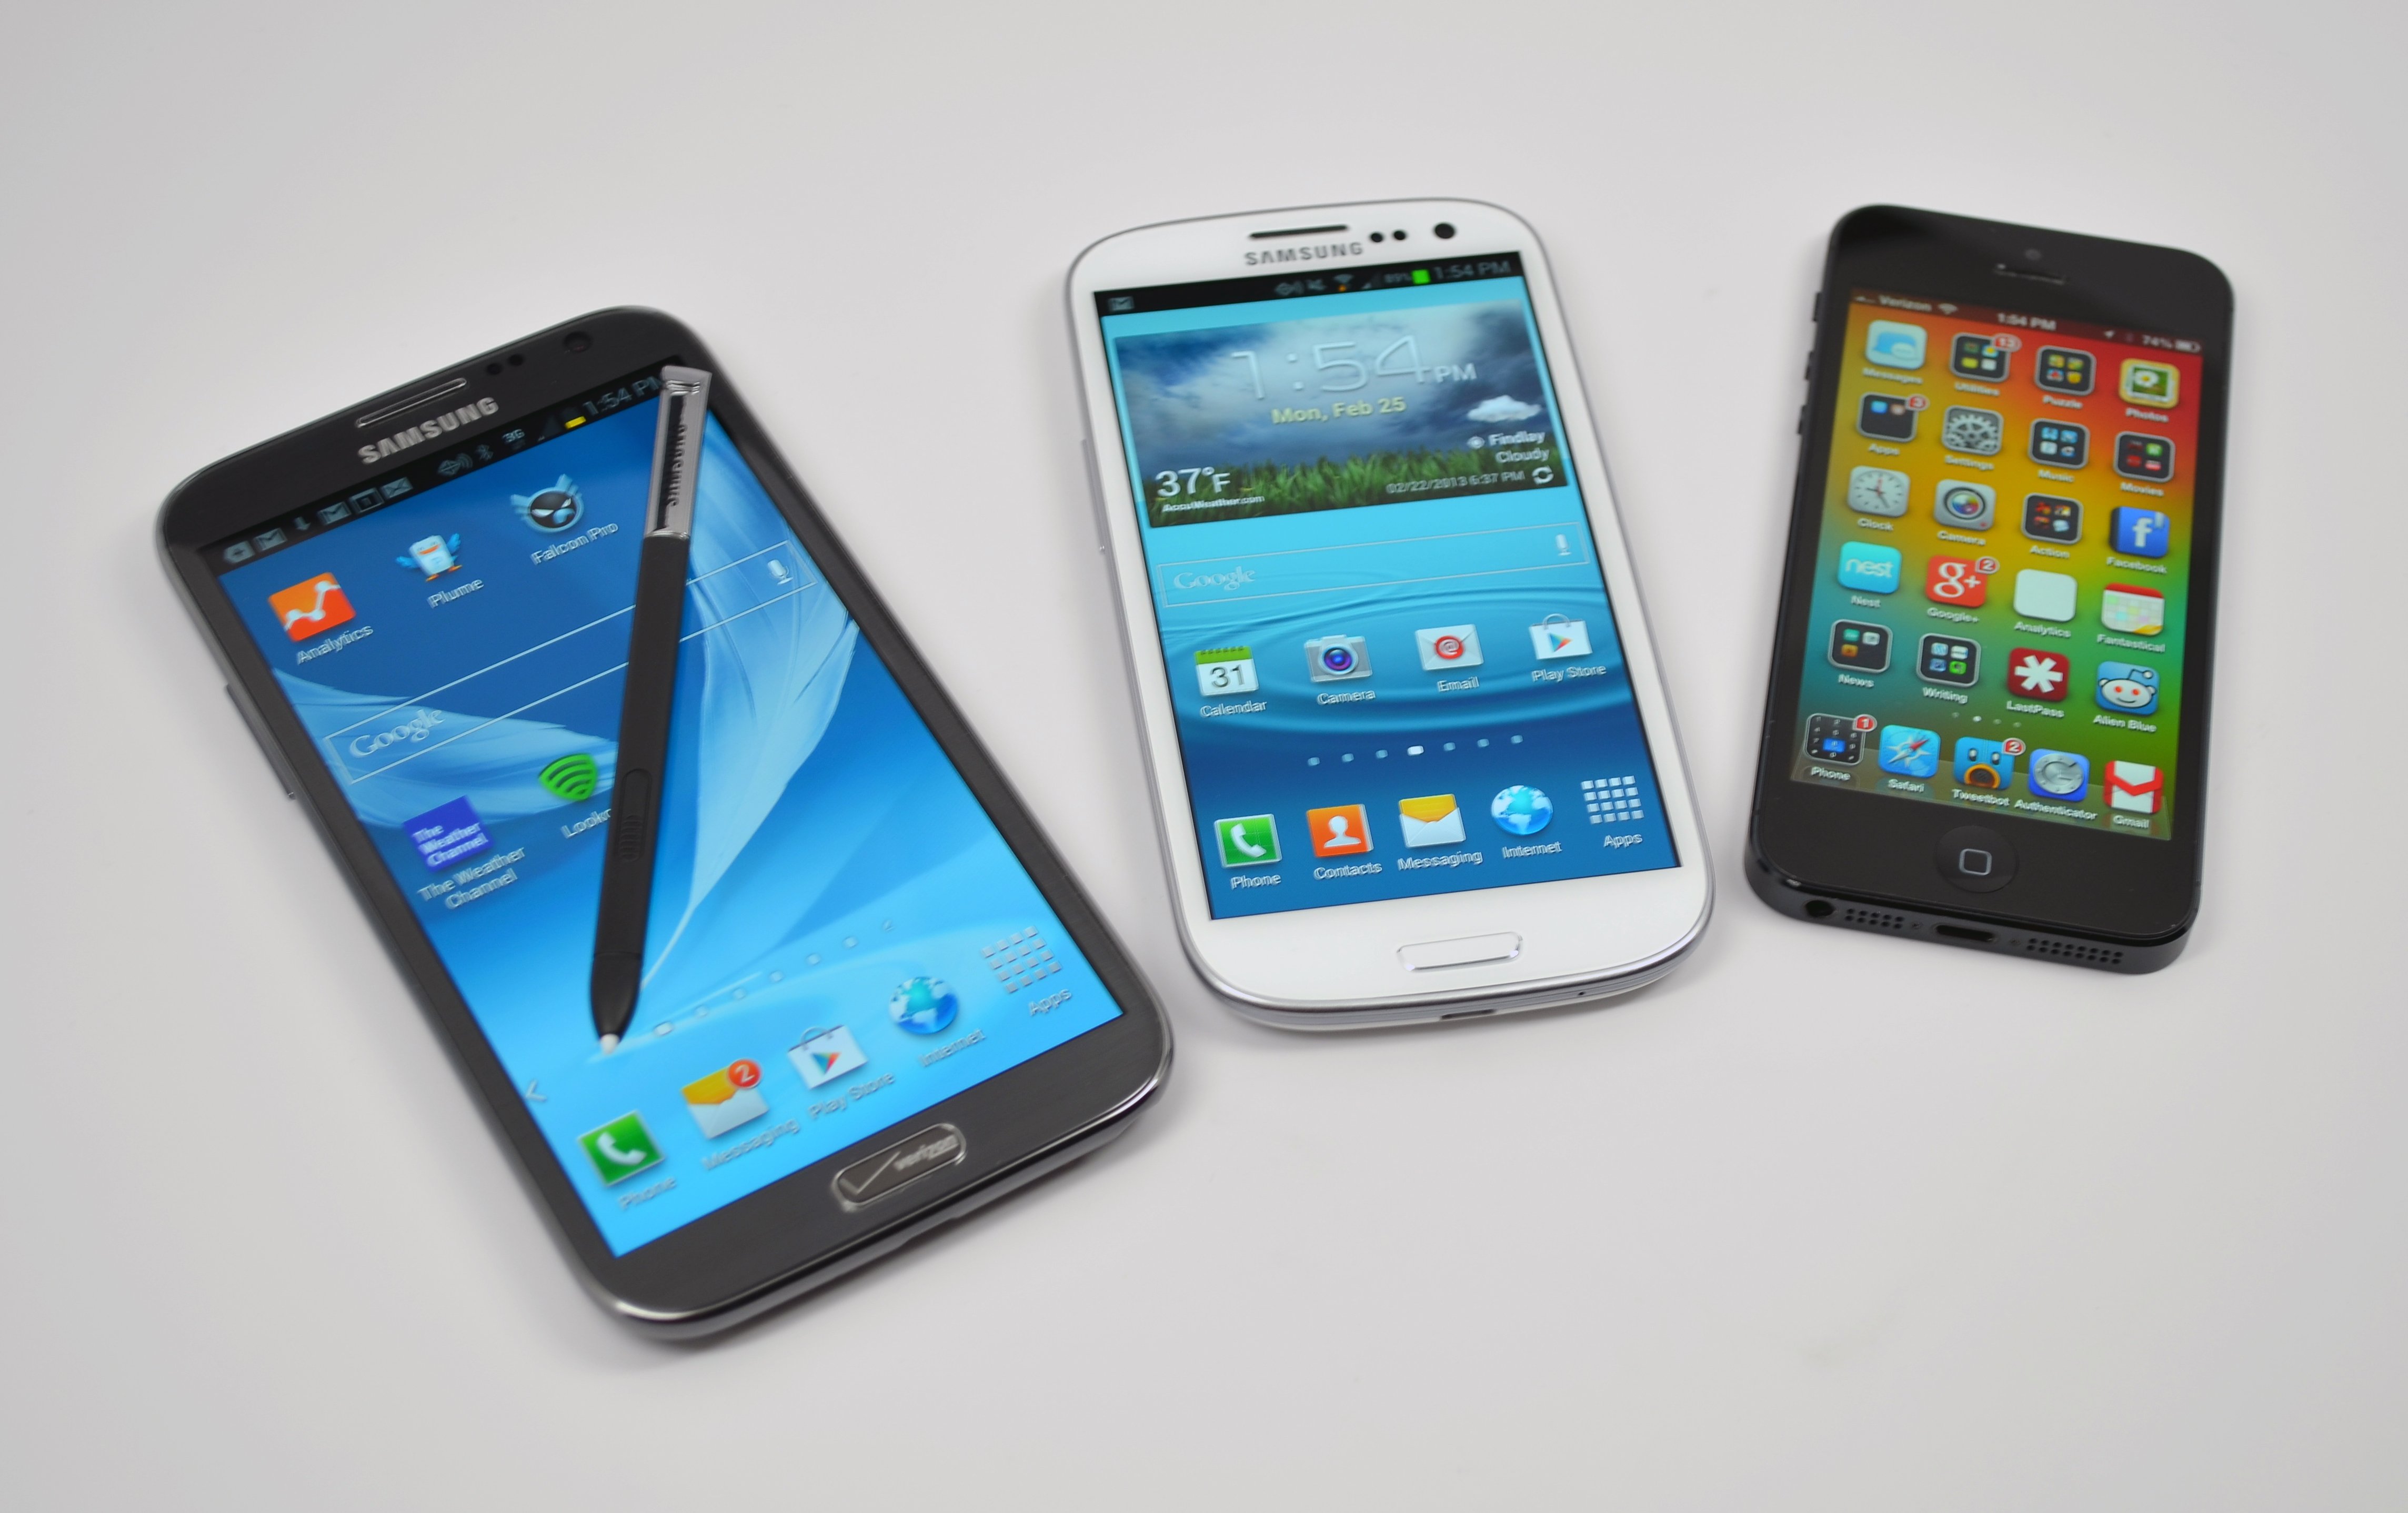 Galaxy s3 Note. Samsung Galaxy Note 2 vs iphone 5. Samsung Galaxy s3. Note 2, s3. Айфон и галакси сравнение